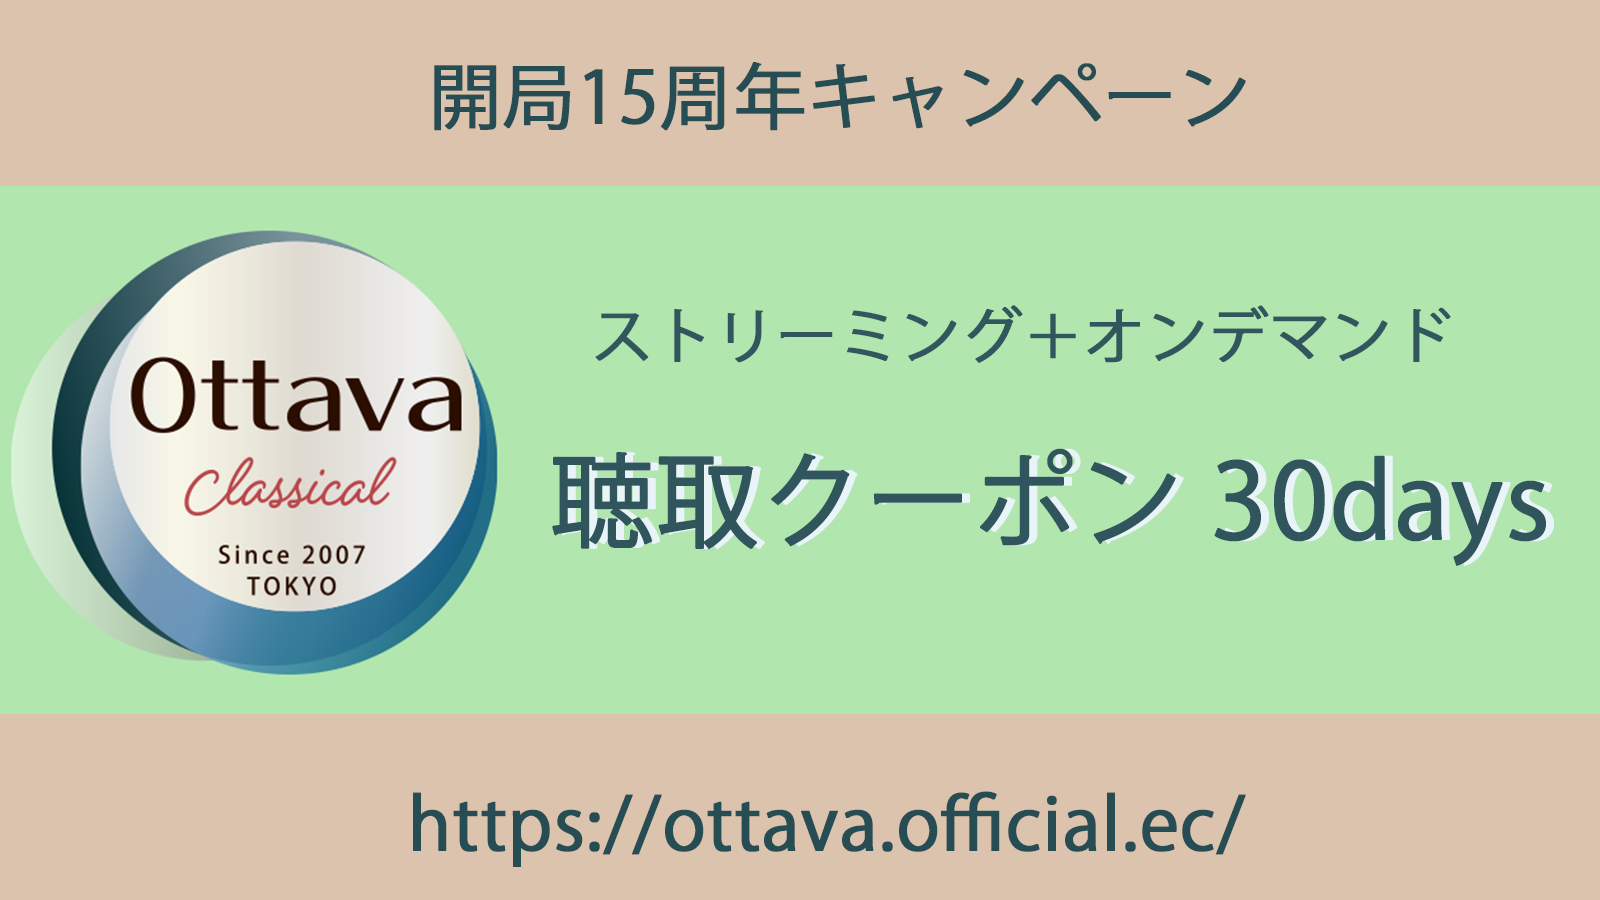 h_takada@ottava.jp